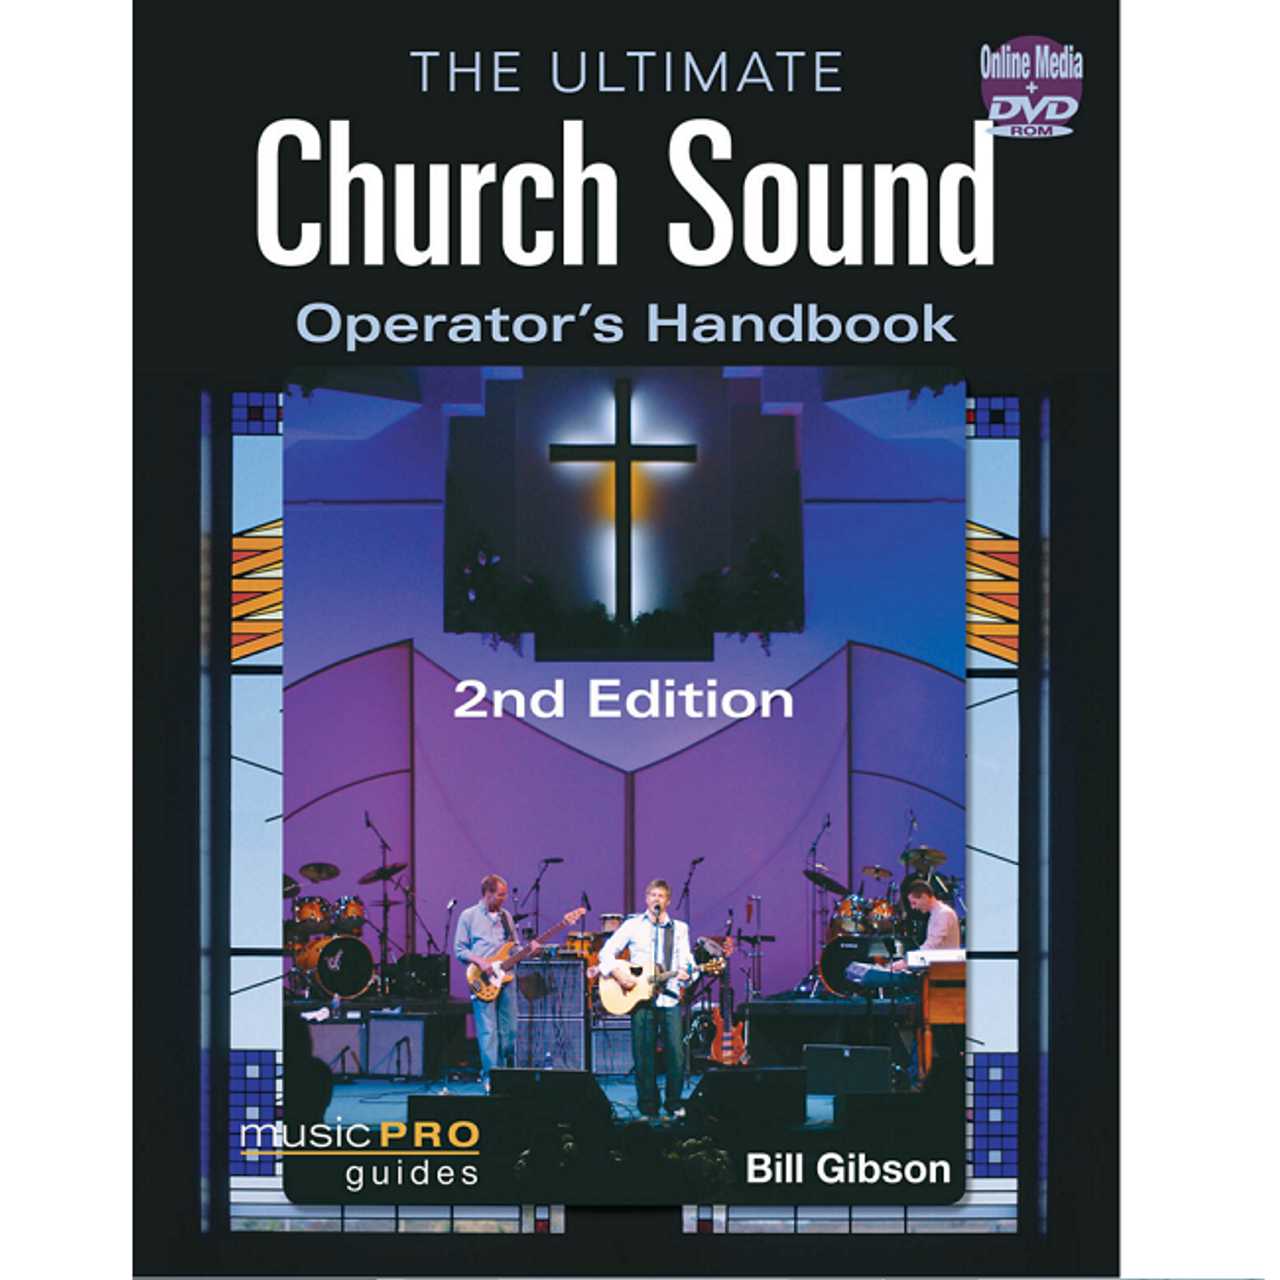 The Ultimate Church Sound Operator's Handbook-2nd Edition